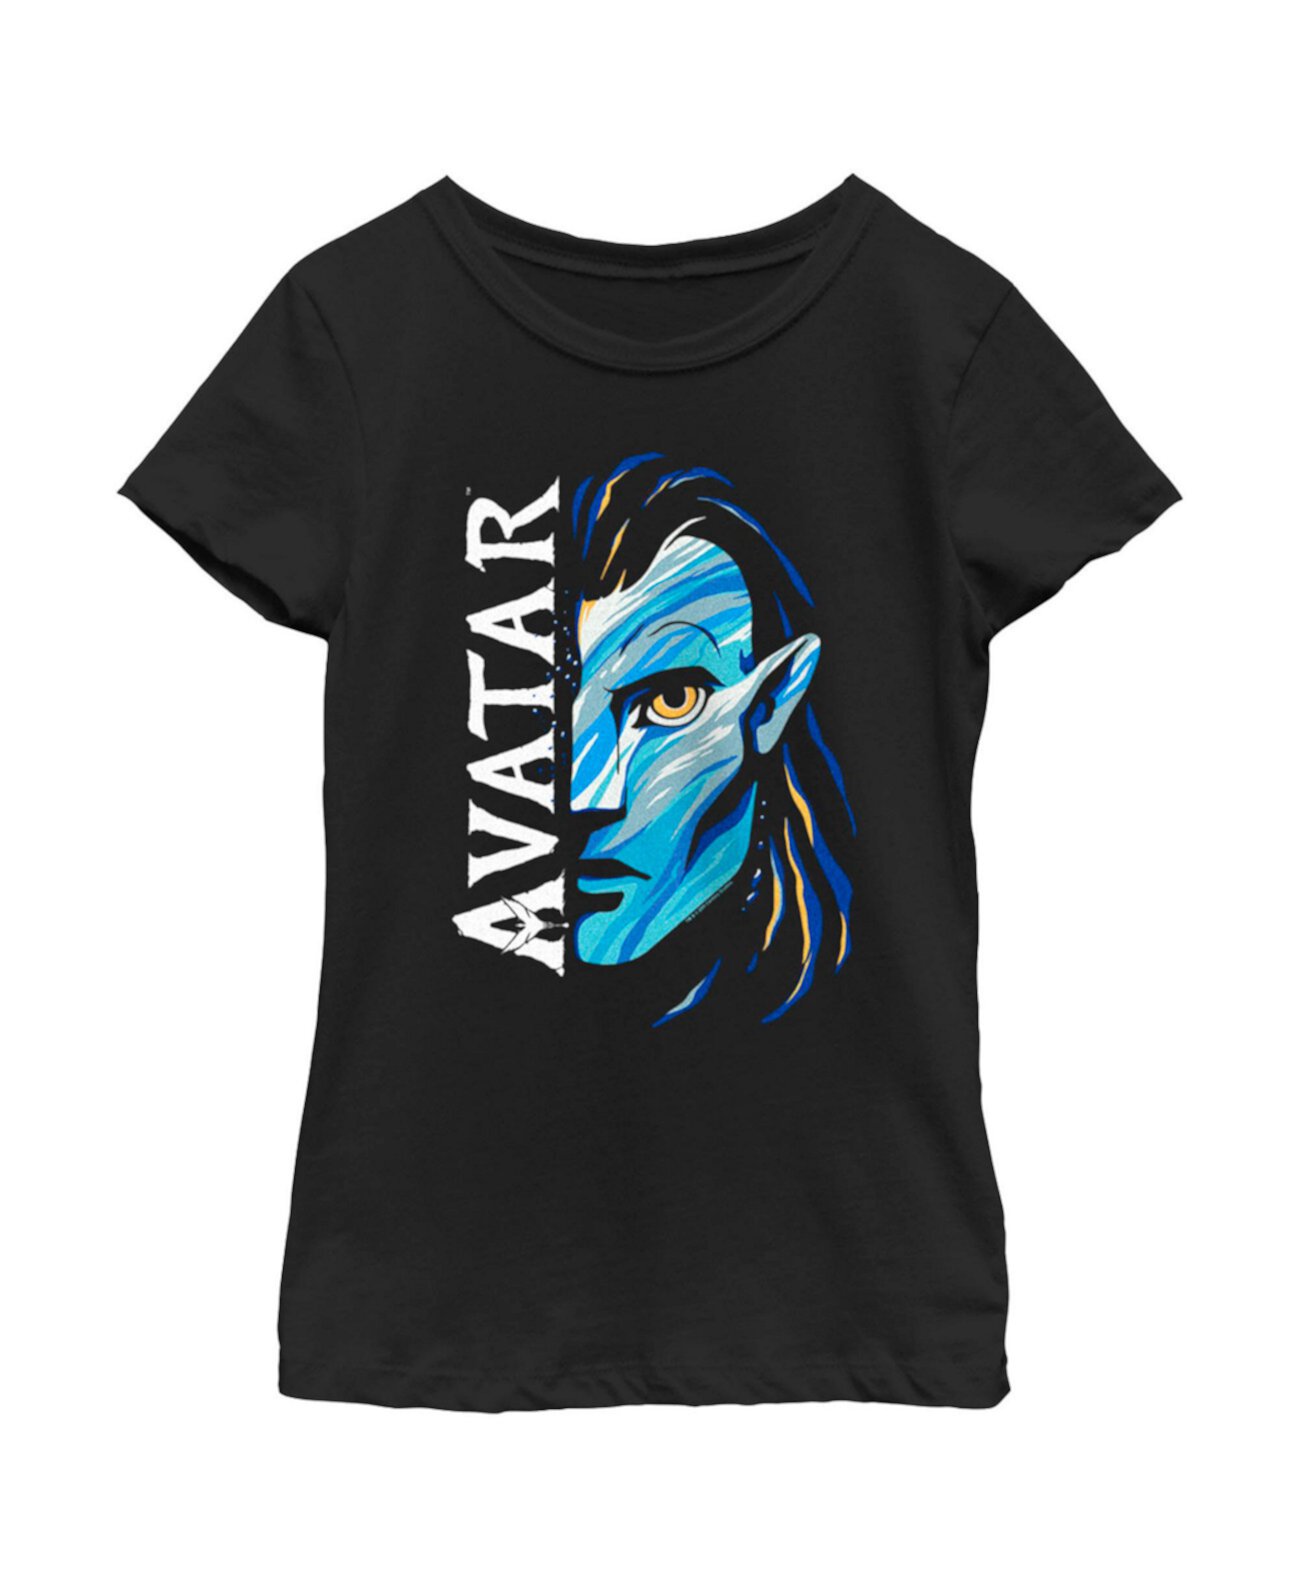 Детская футболка с логотипом Jake Sully Girl's Avatar: The Way of Water 20th Century Fox